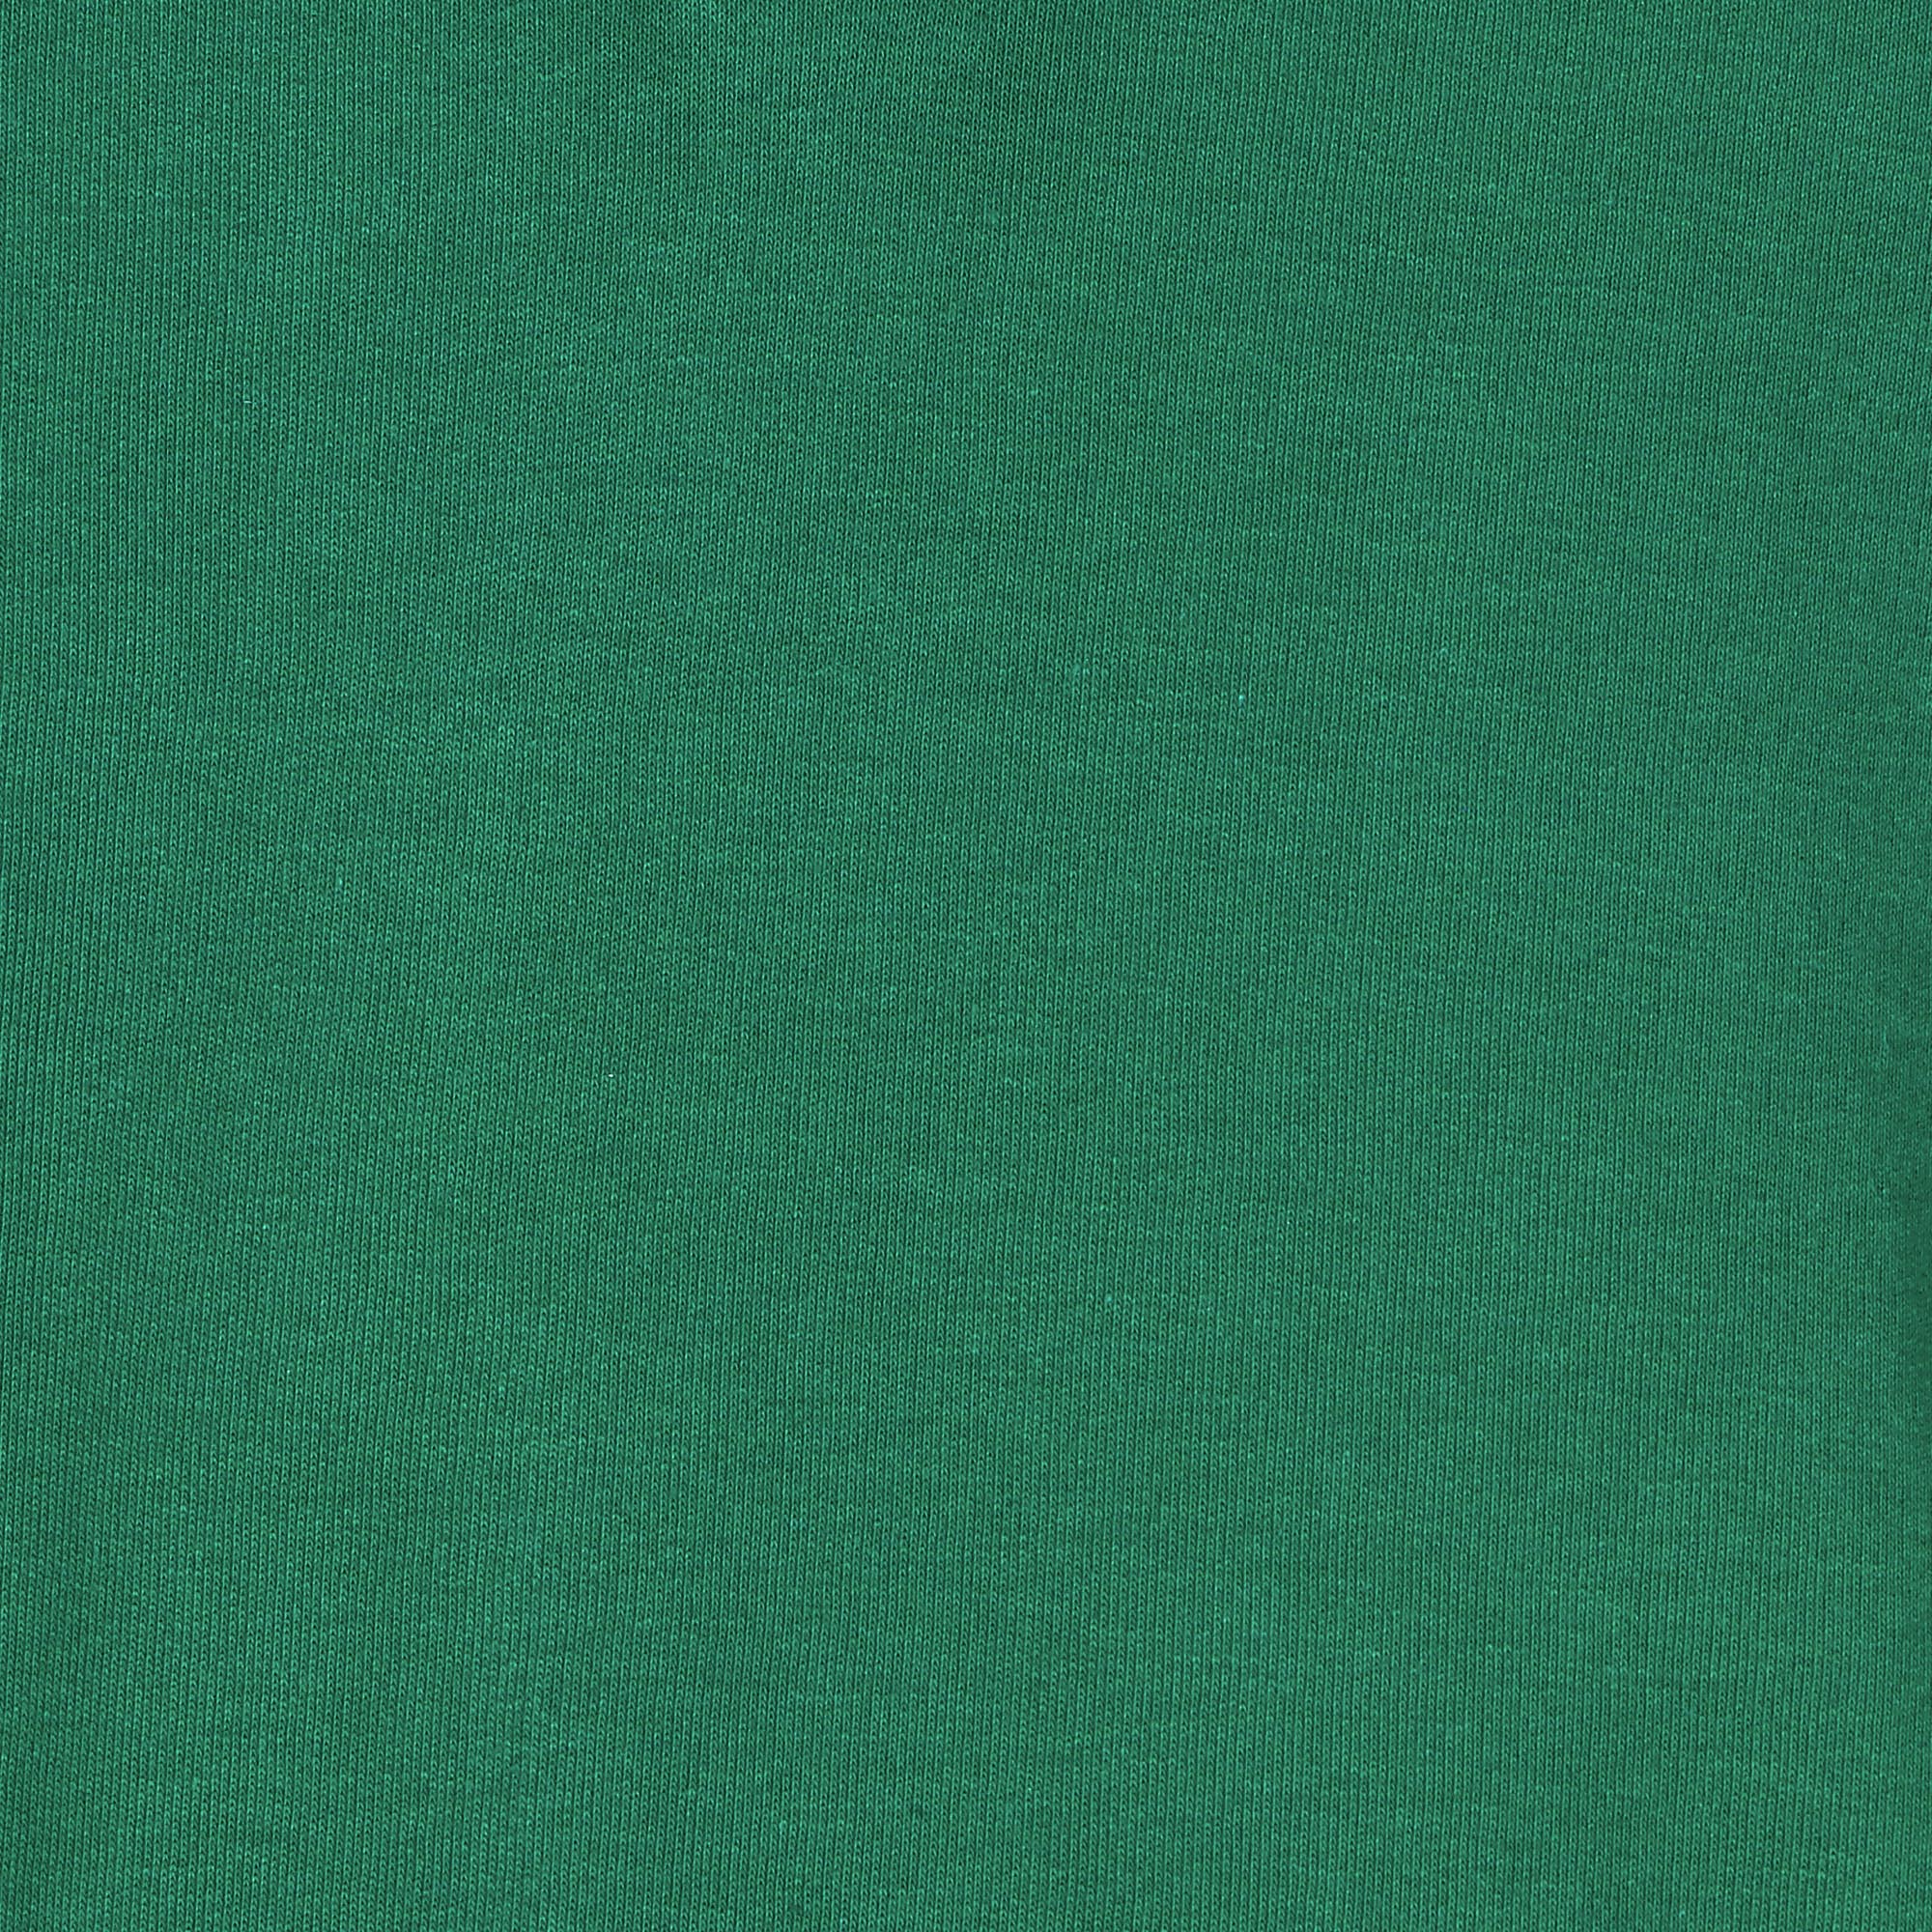 Мужская футболка-поло Diva Teks зелёная (DTD-09), цвет зелёный, размер 44-46 - фото 6